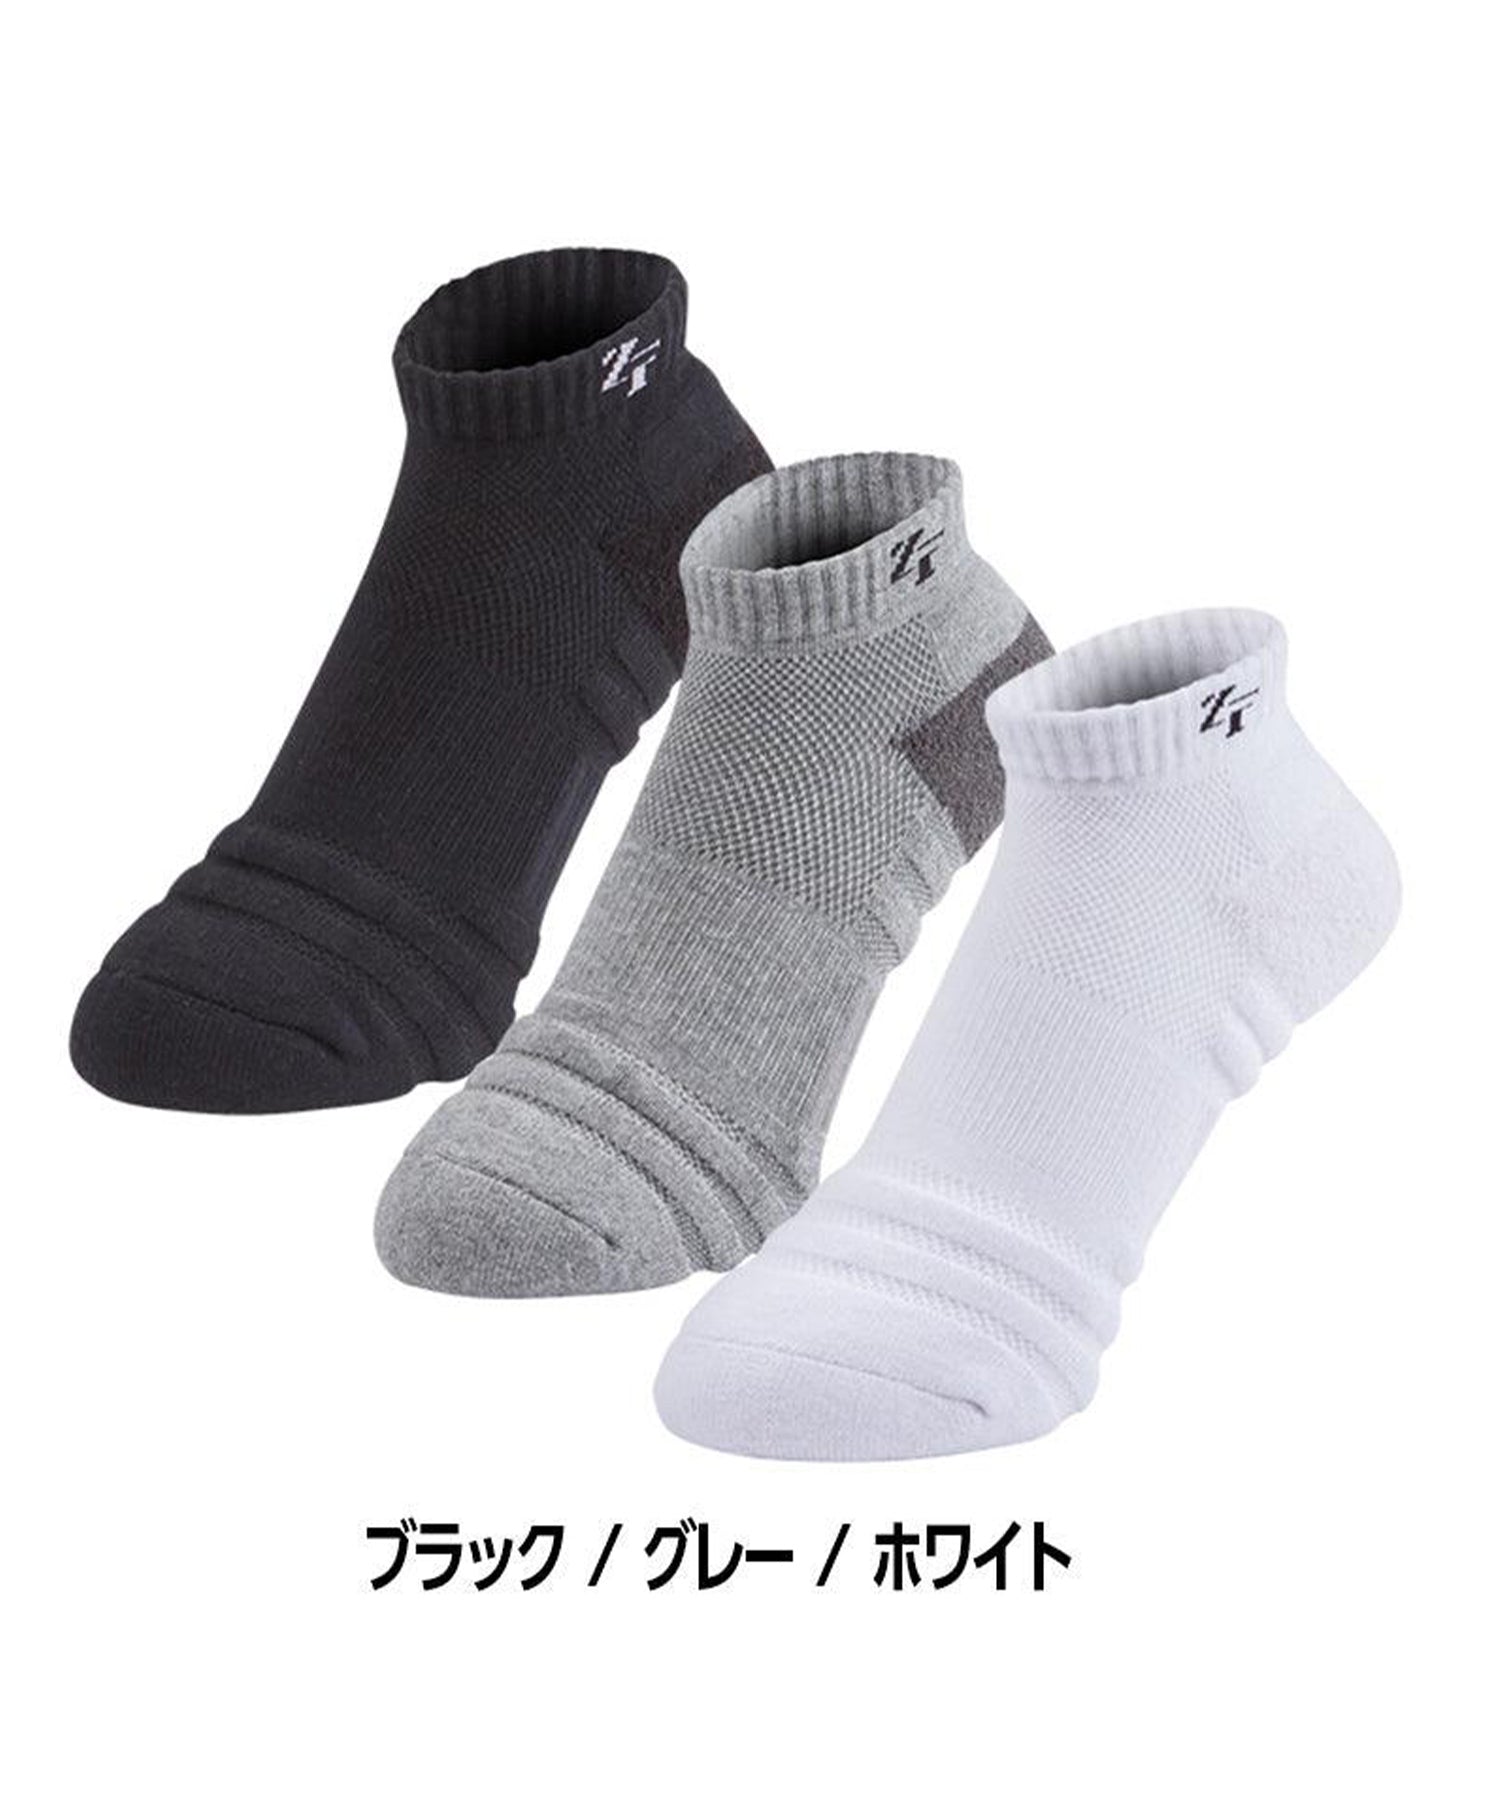 Zero Fit Socks Short (old type)